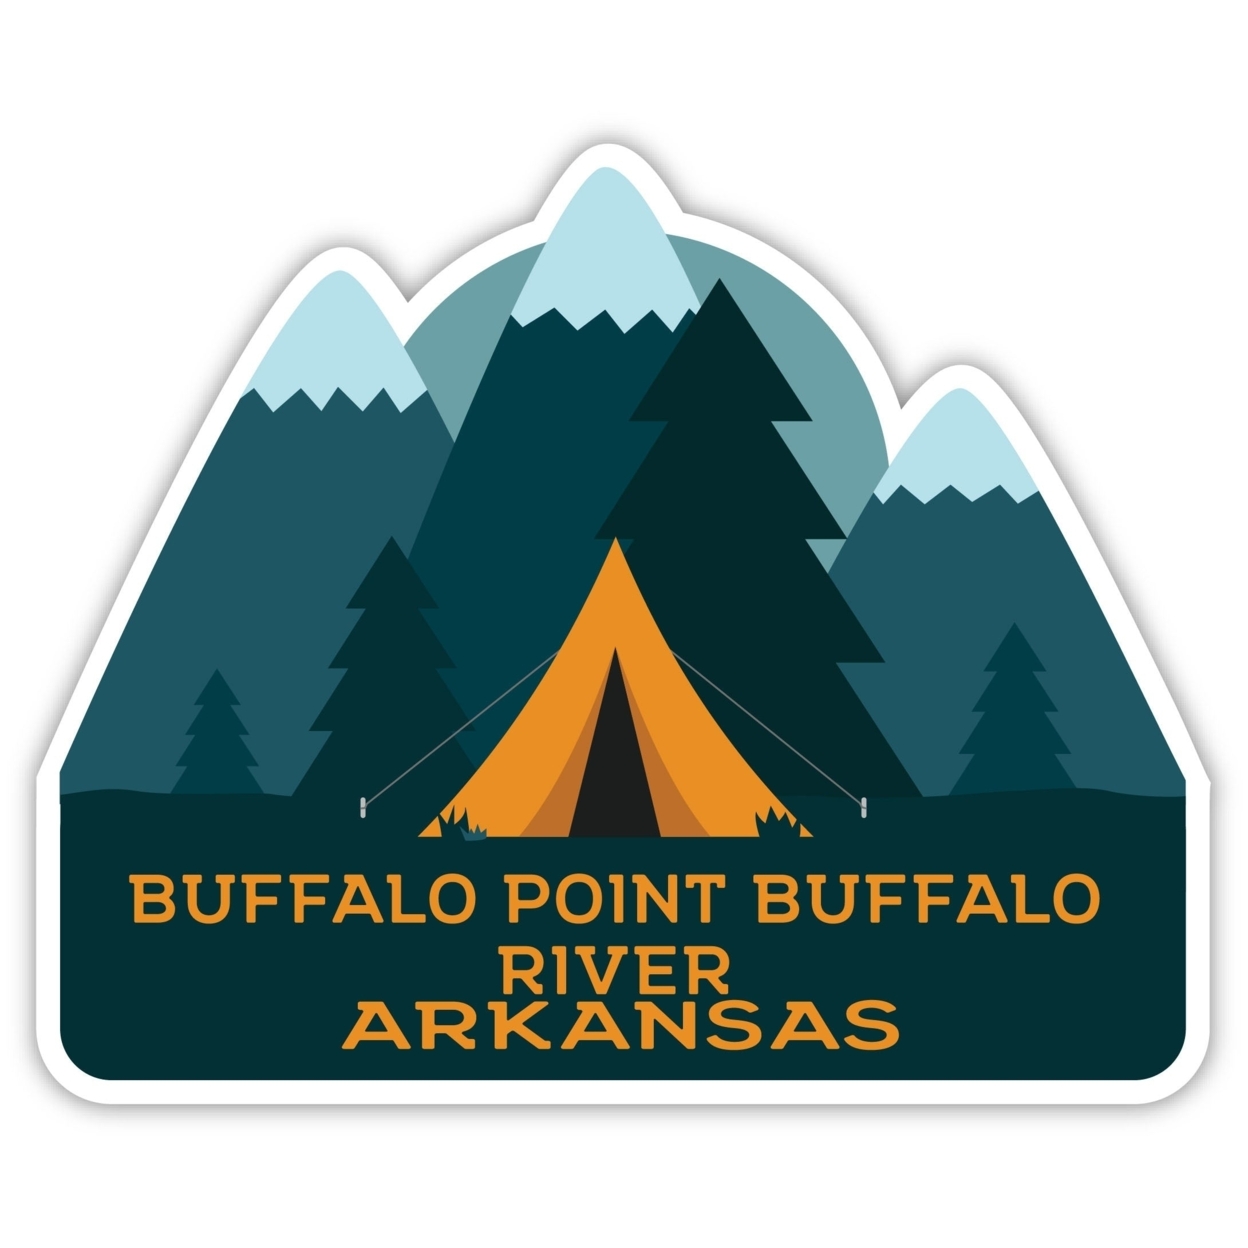 Buffalo Point Buffalo River Arkansas Souvenir Decorative Stickers (Choose Theme And Size) - Single Unit, 2-Inch, Tent